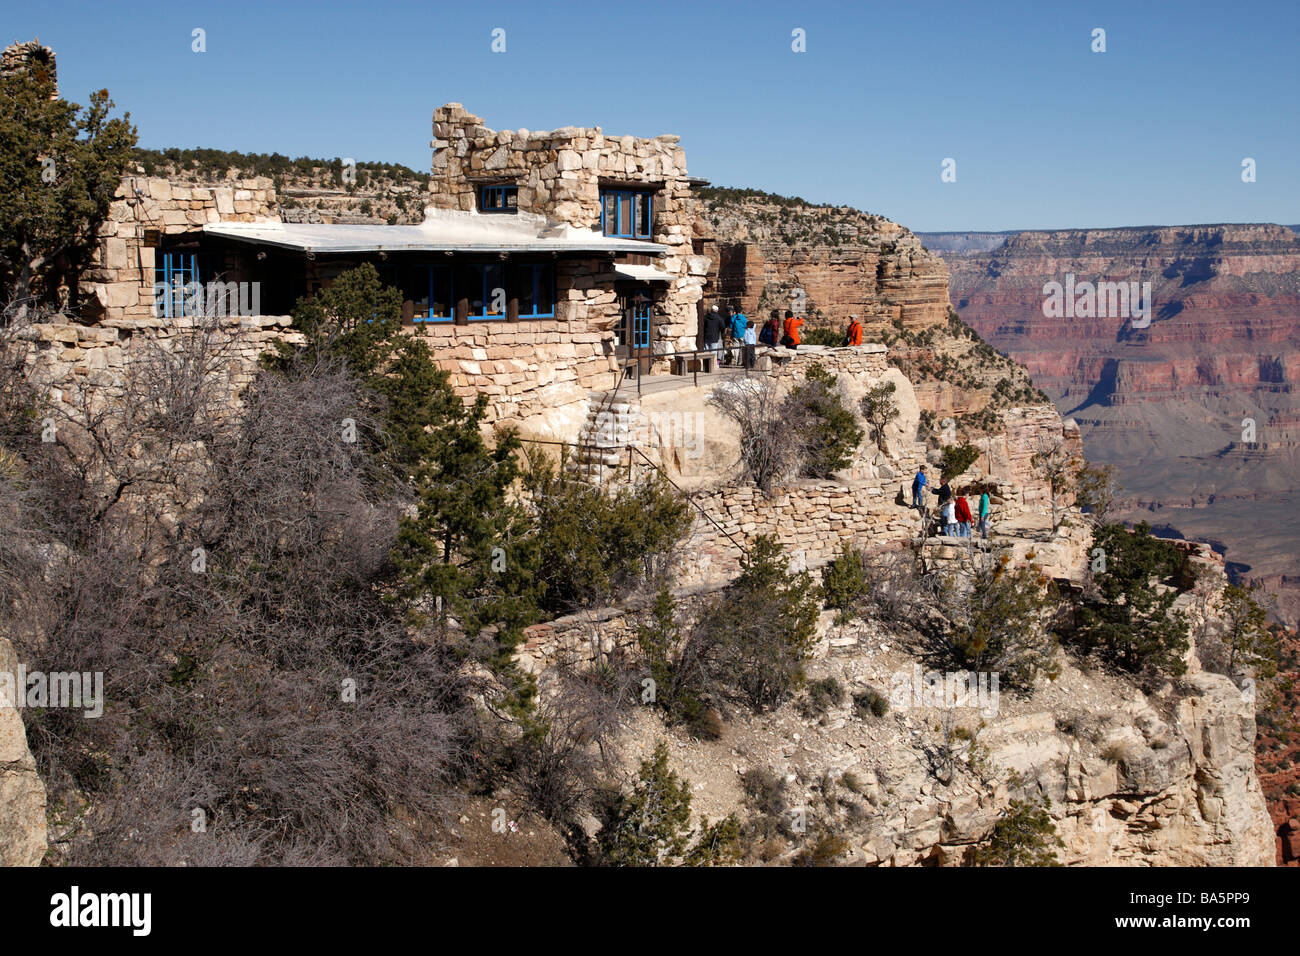 Suche Studio in der Nähe von bright Angel Lodge grand Canyon south rim  Nationalpark Arizona usa Stockfotografie - Alamy